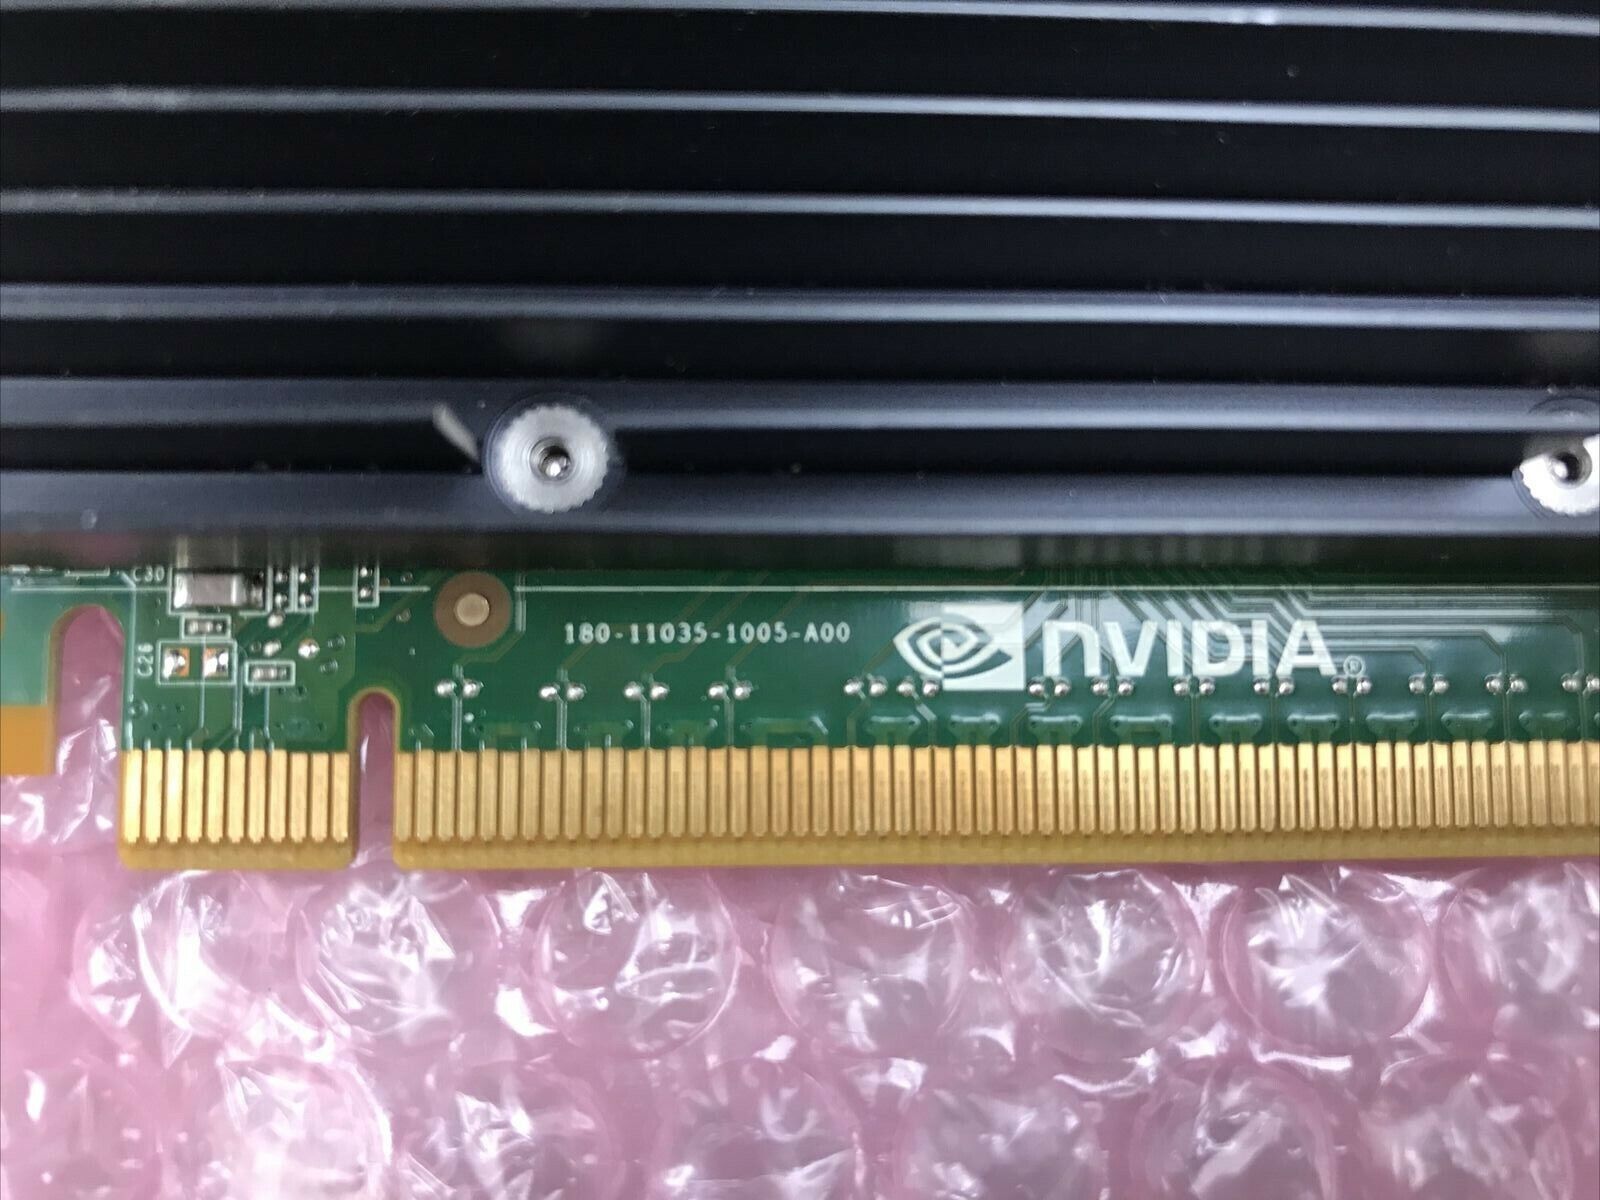 Nvidia NVS 300 512MB GDDR3 PCI Express x16 Desktop Video Card C22